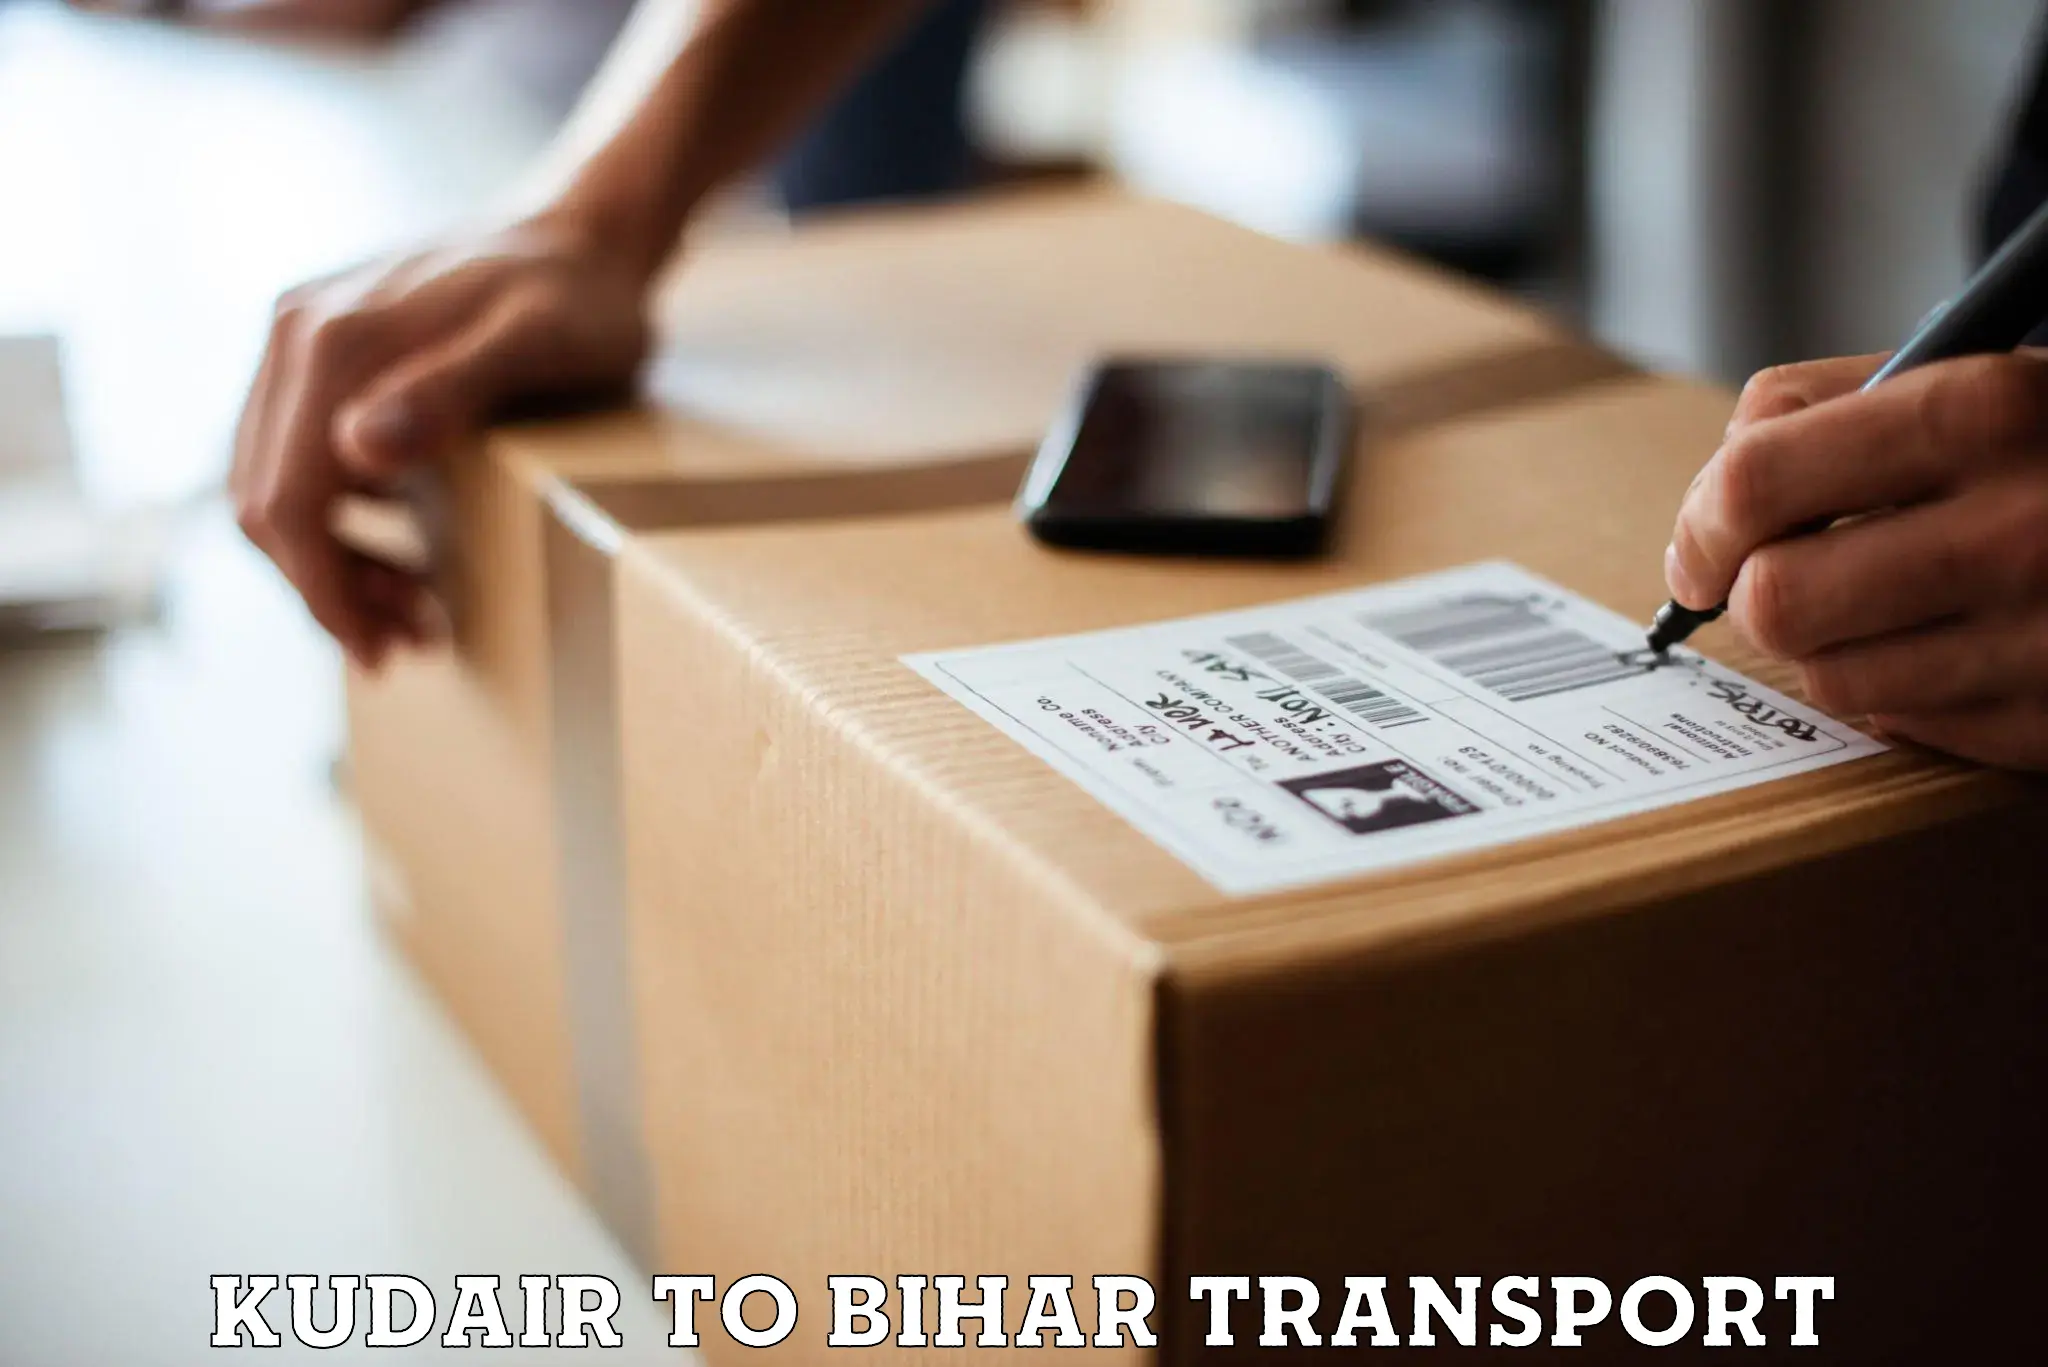 Truck transport companies in India Kudair to Thakurganj